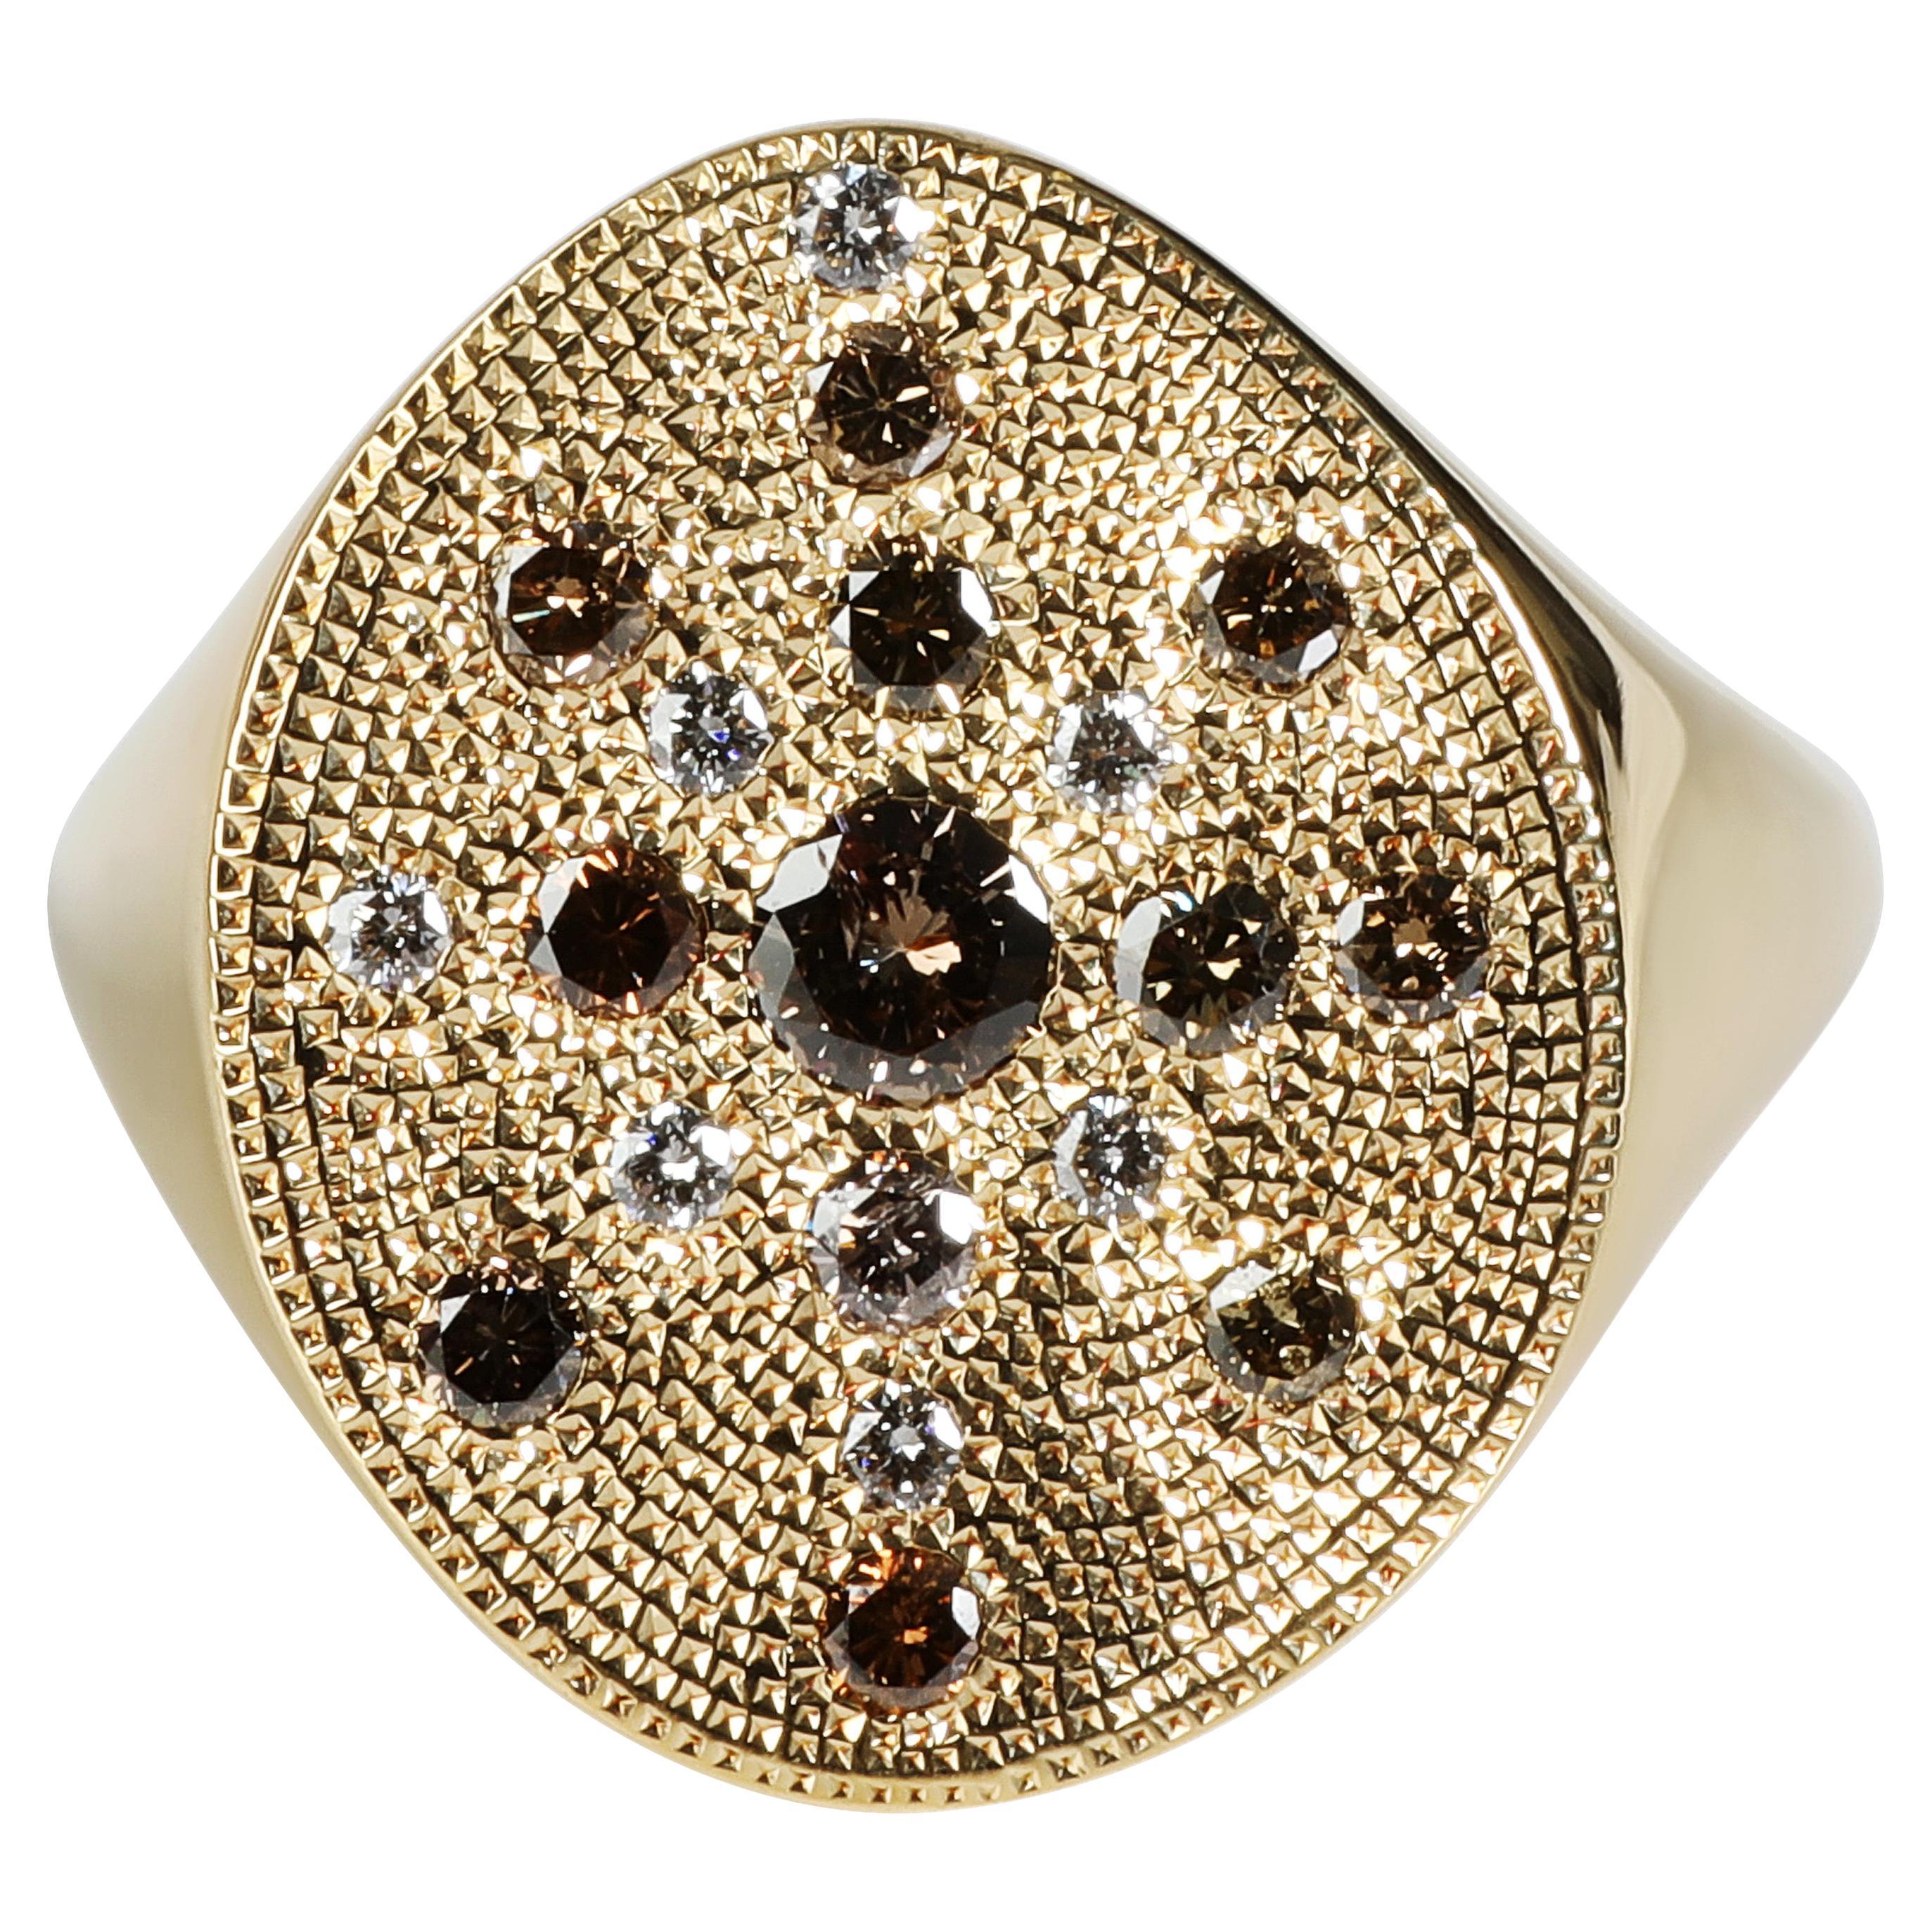 DeBeers Talisman Diamond Signet Style Ring in 18k Yellow Gold 0.52 Ctw